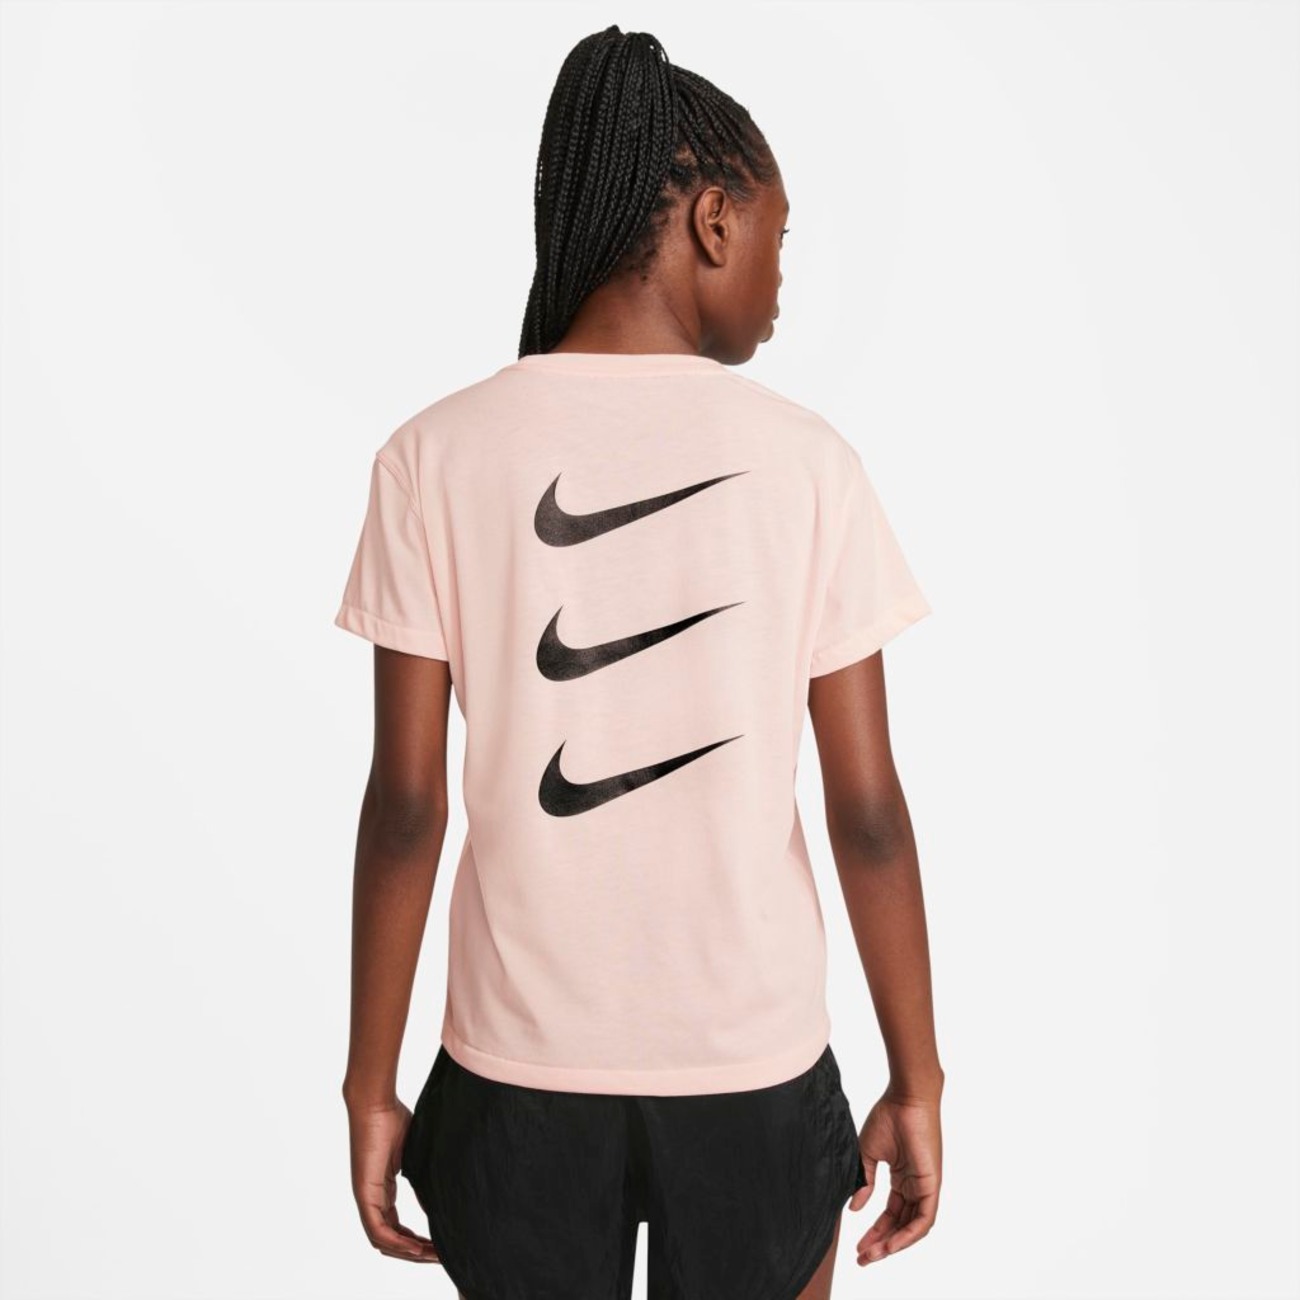 Camiseta Nike Dri-FIT Run Division Feminina - Foto 2